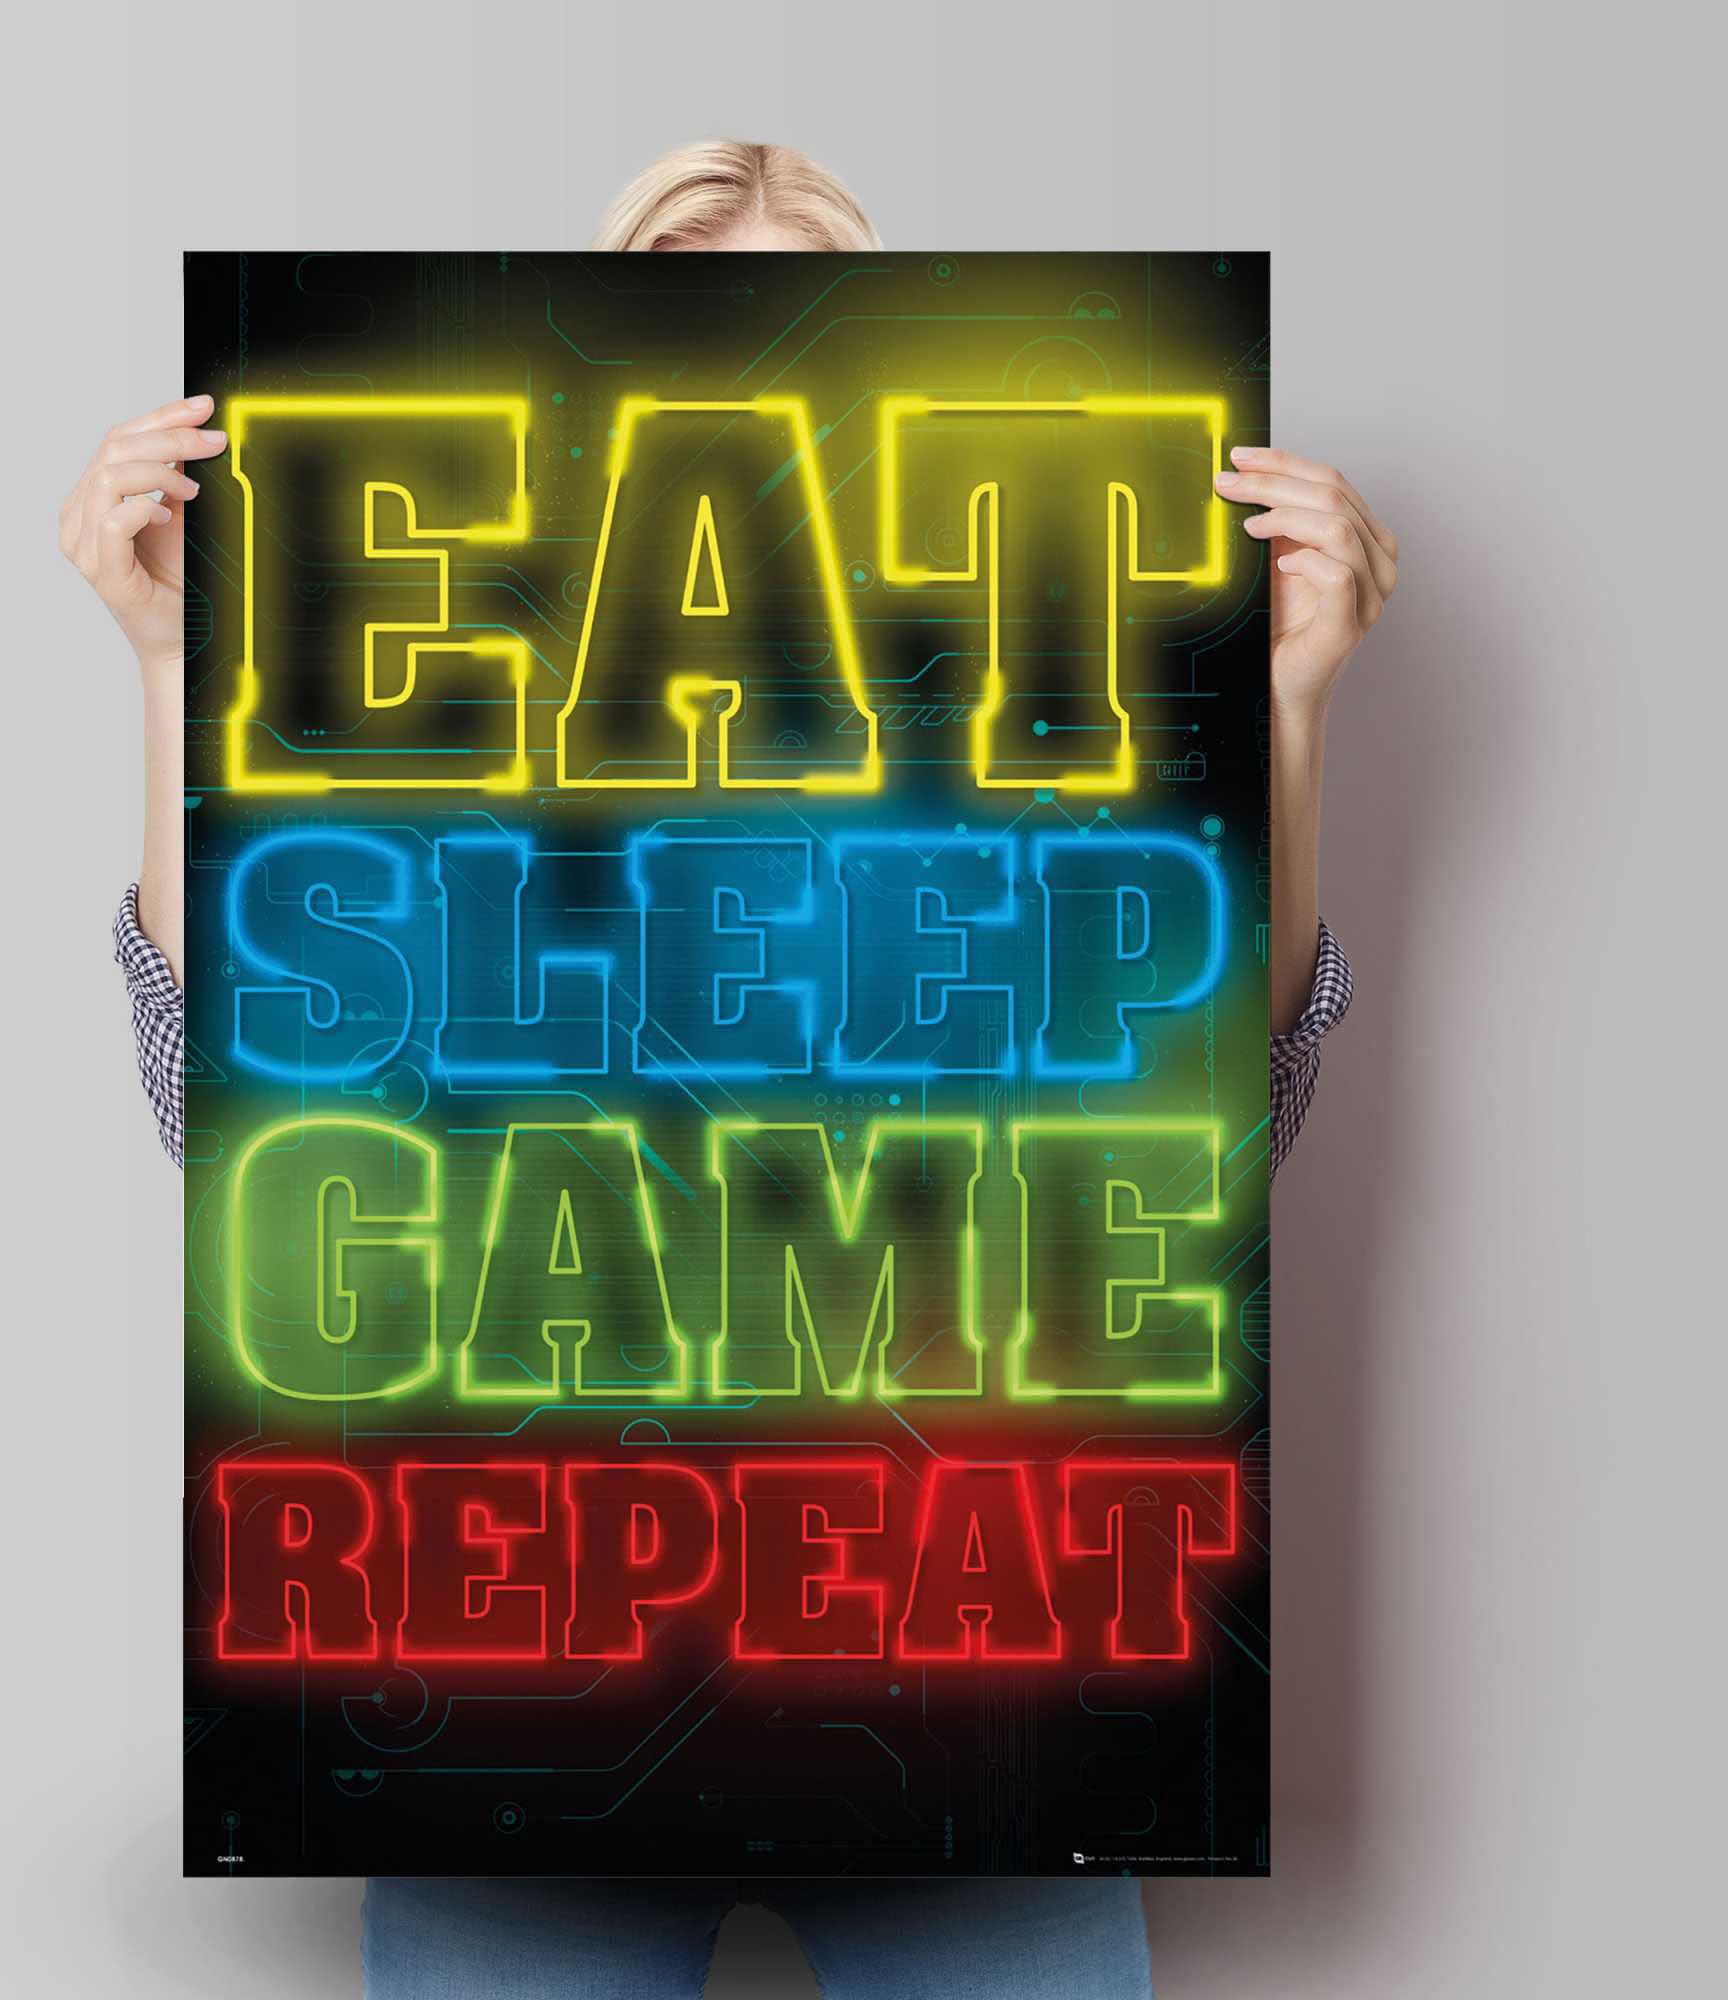 OTTO Zocken Poster Eat Spiele, (1 sleep bei St.) Reinders! »Poster game repeat«,